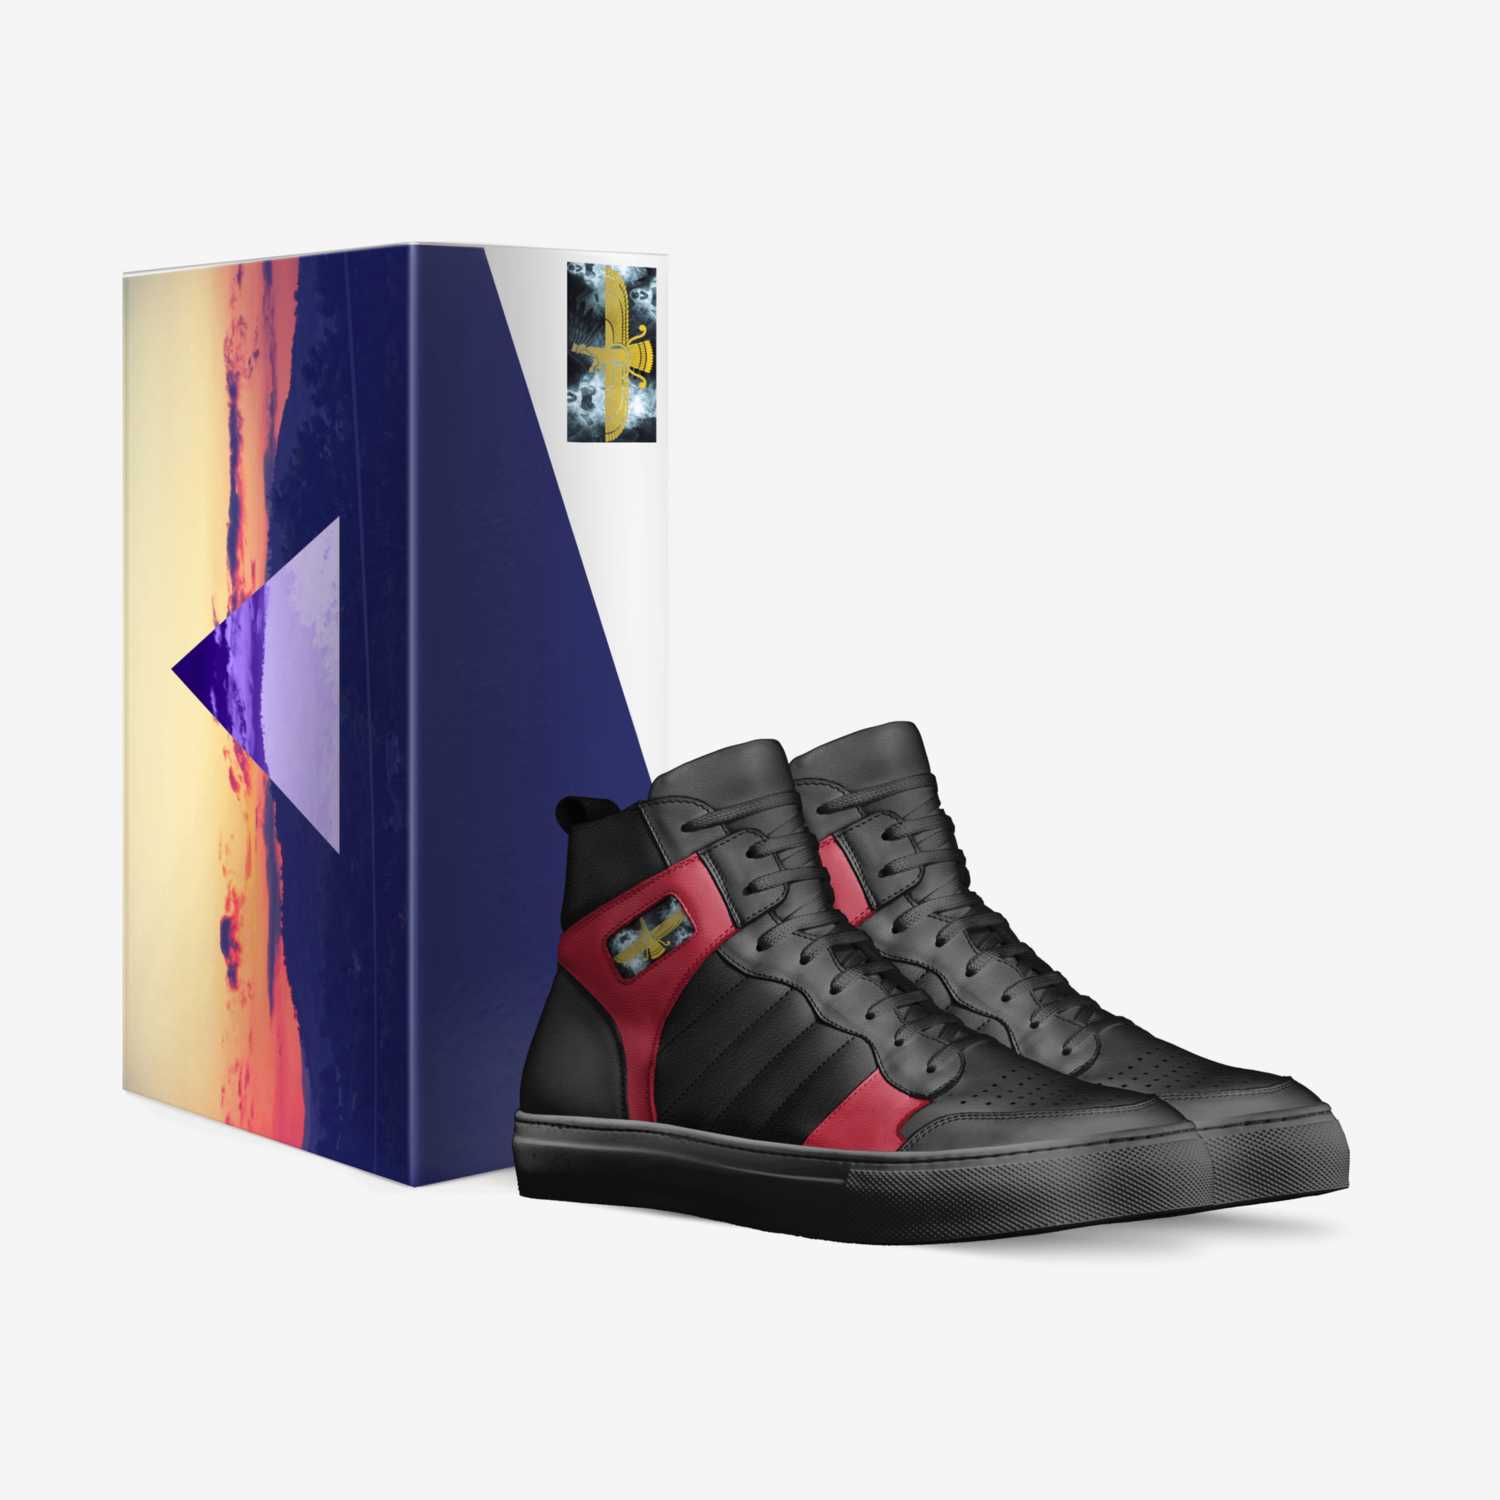 Ahura  custom made in Italy shoes by Daryoush | Box view